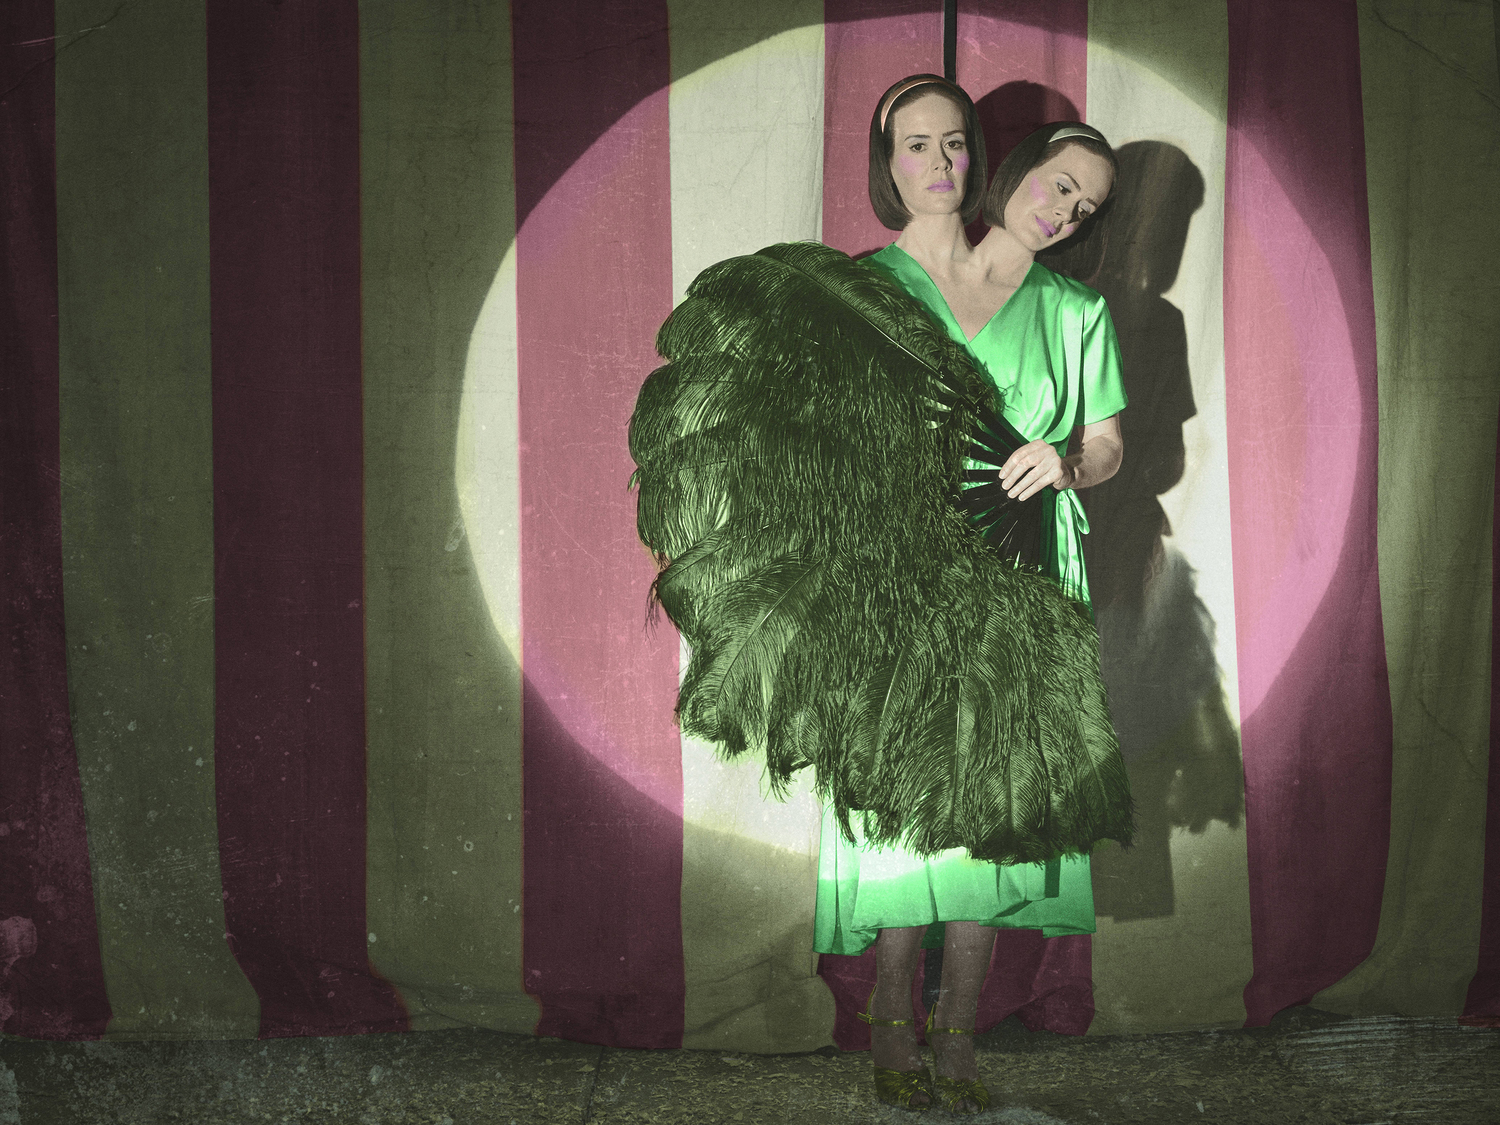 AMERICAN HORROR STORY: FREAK SHOW -- Pictured: Sarah Paulson as Bette and Dot Tattler. CR: Frank Ockenfels/FX